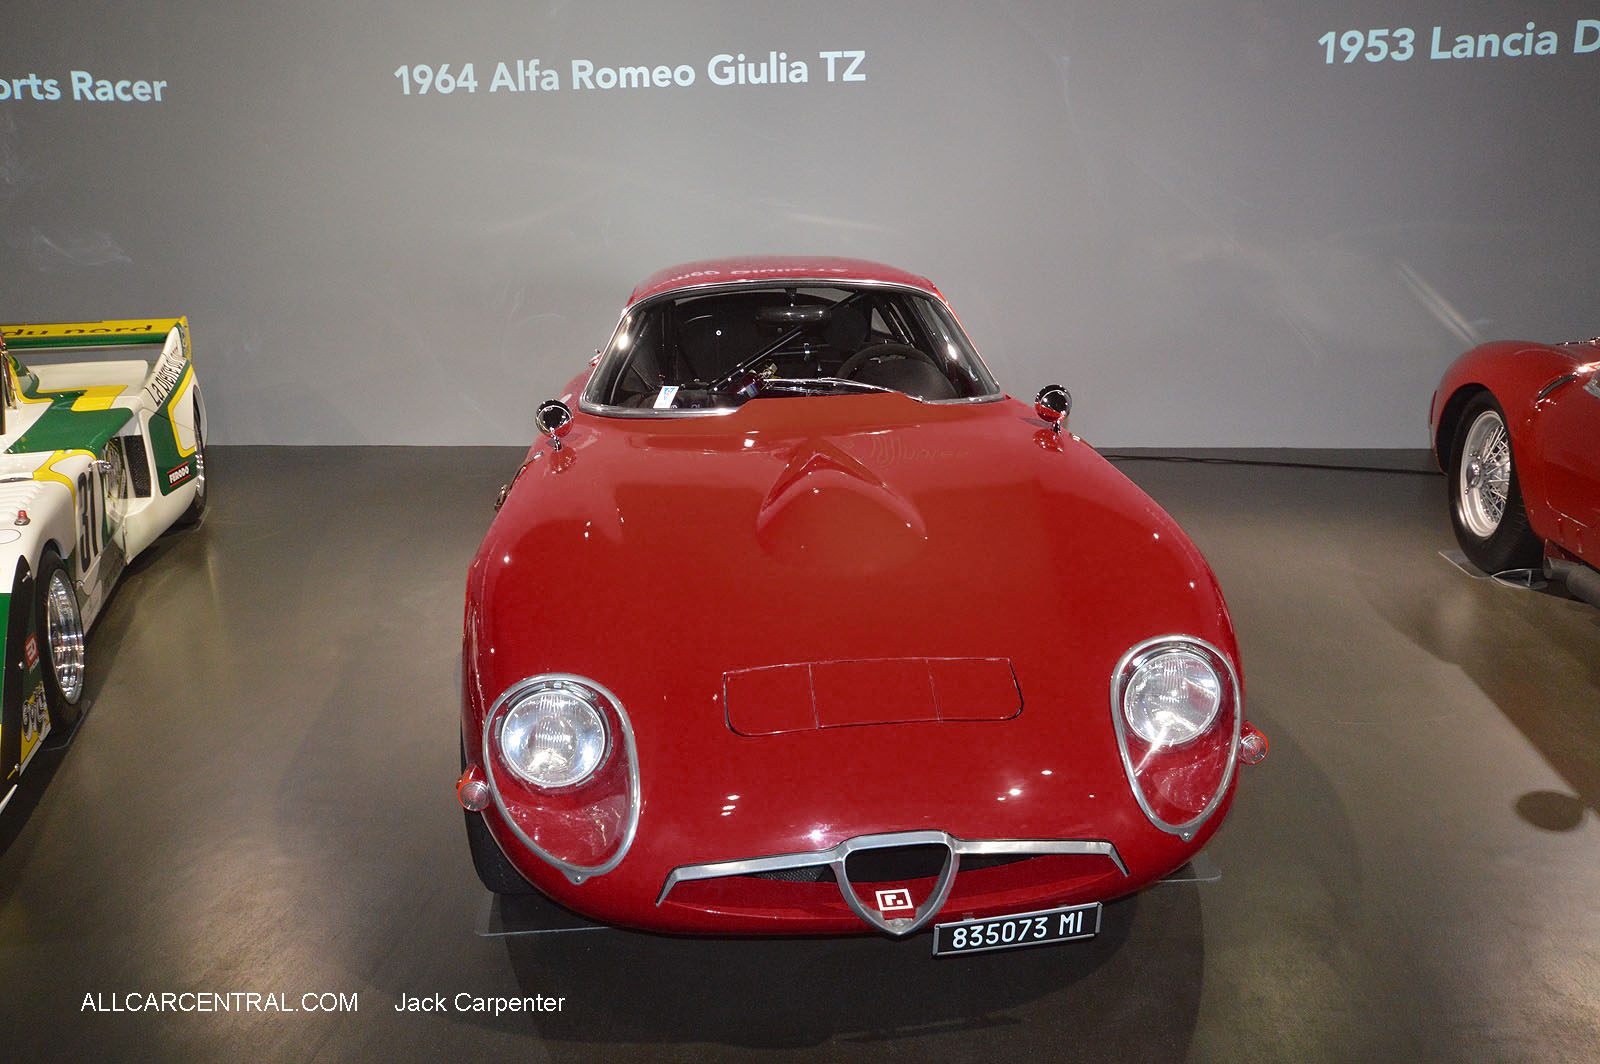  Alfa Romeo Giulia TZ 1964 Petersen Automotive Museum 2016 Jack Carpenter Photo  